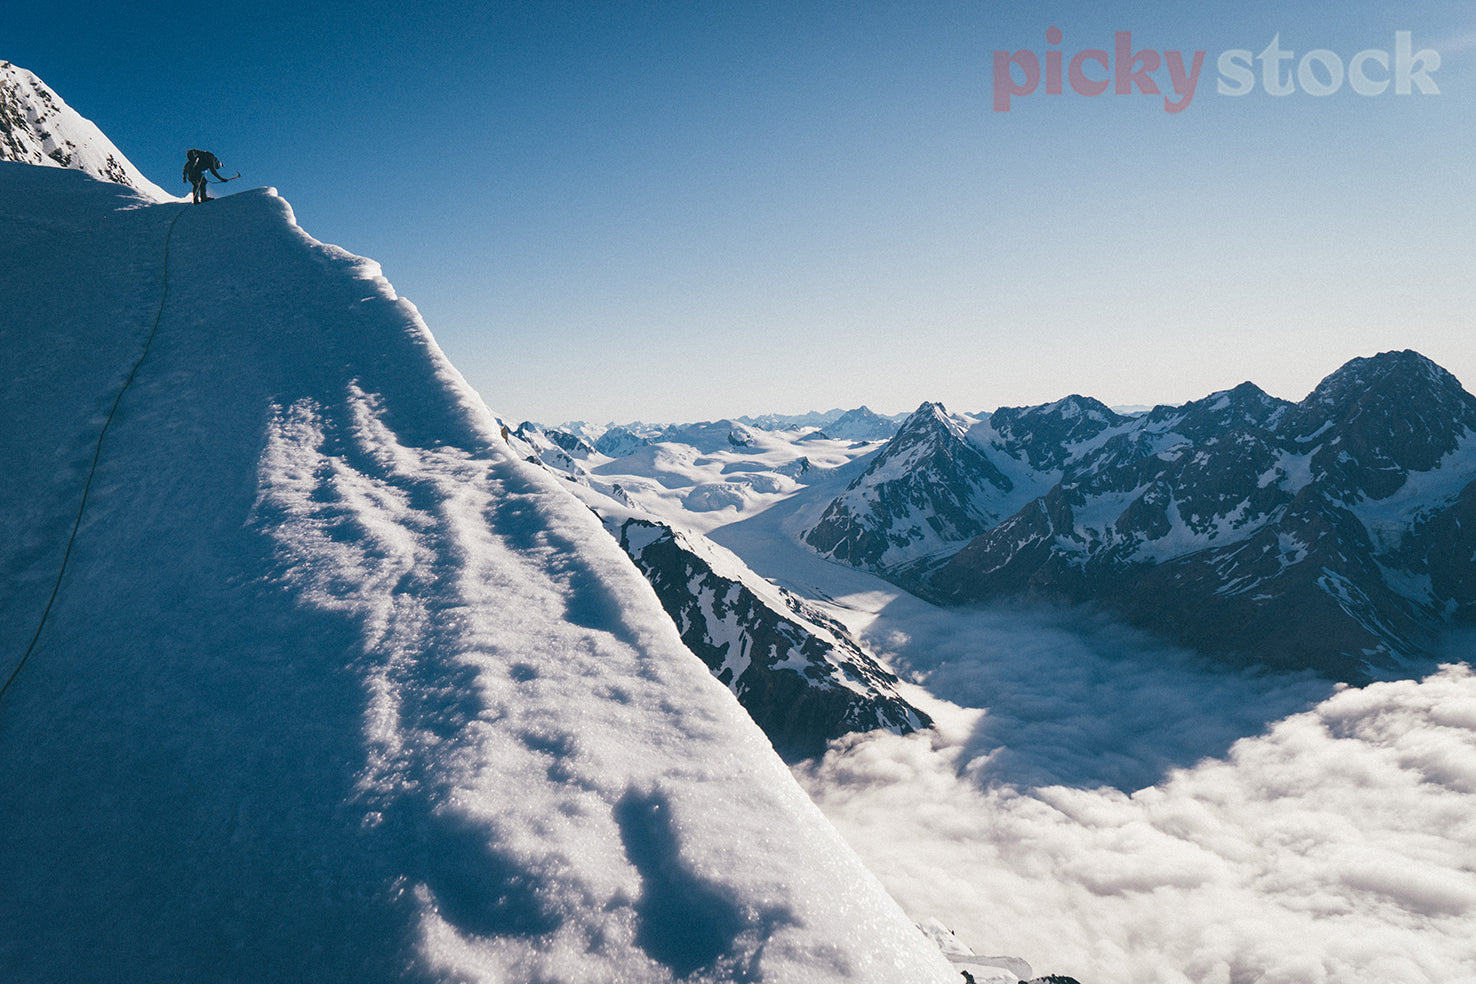 A mountain climber builds an anchor along an icy ridge